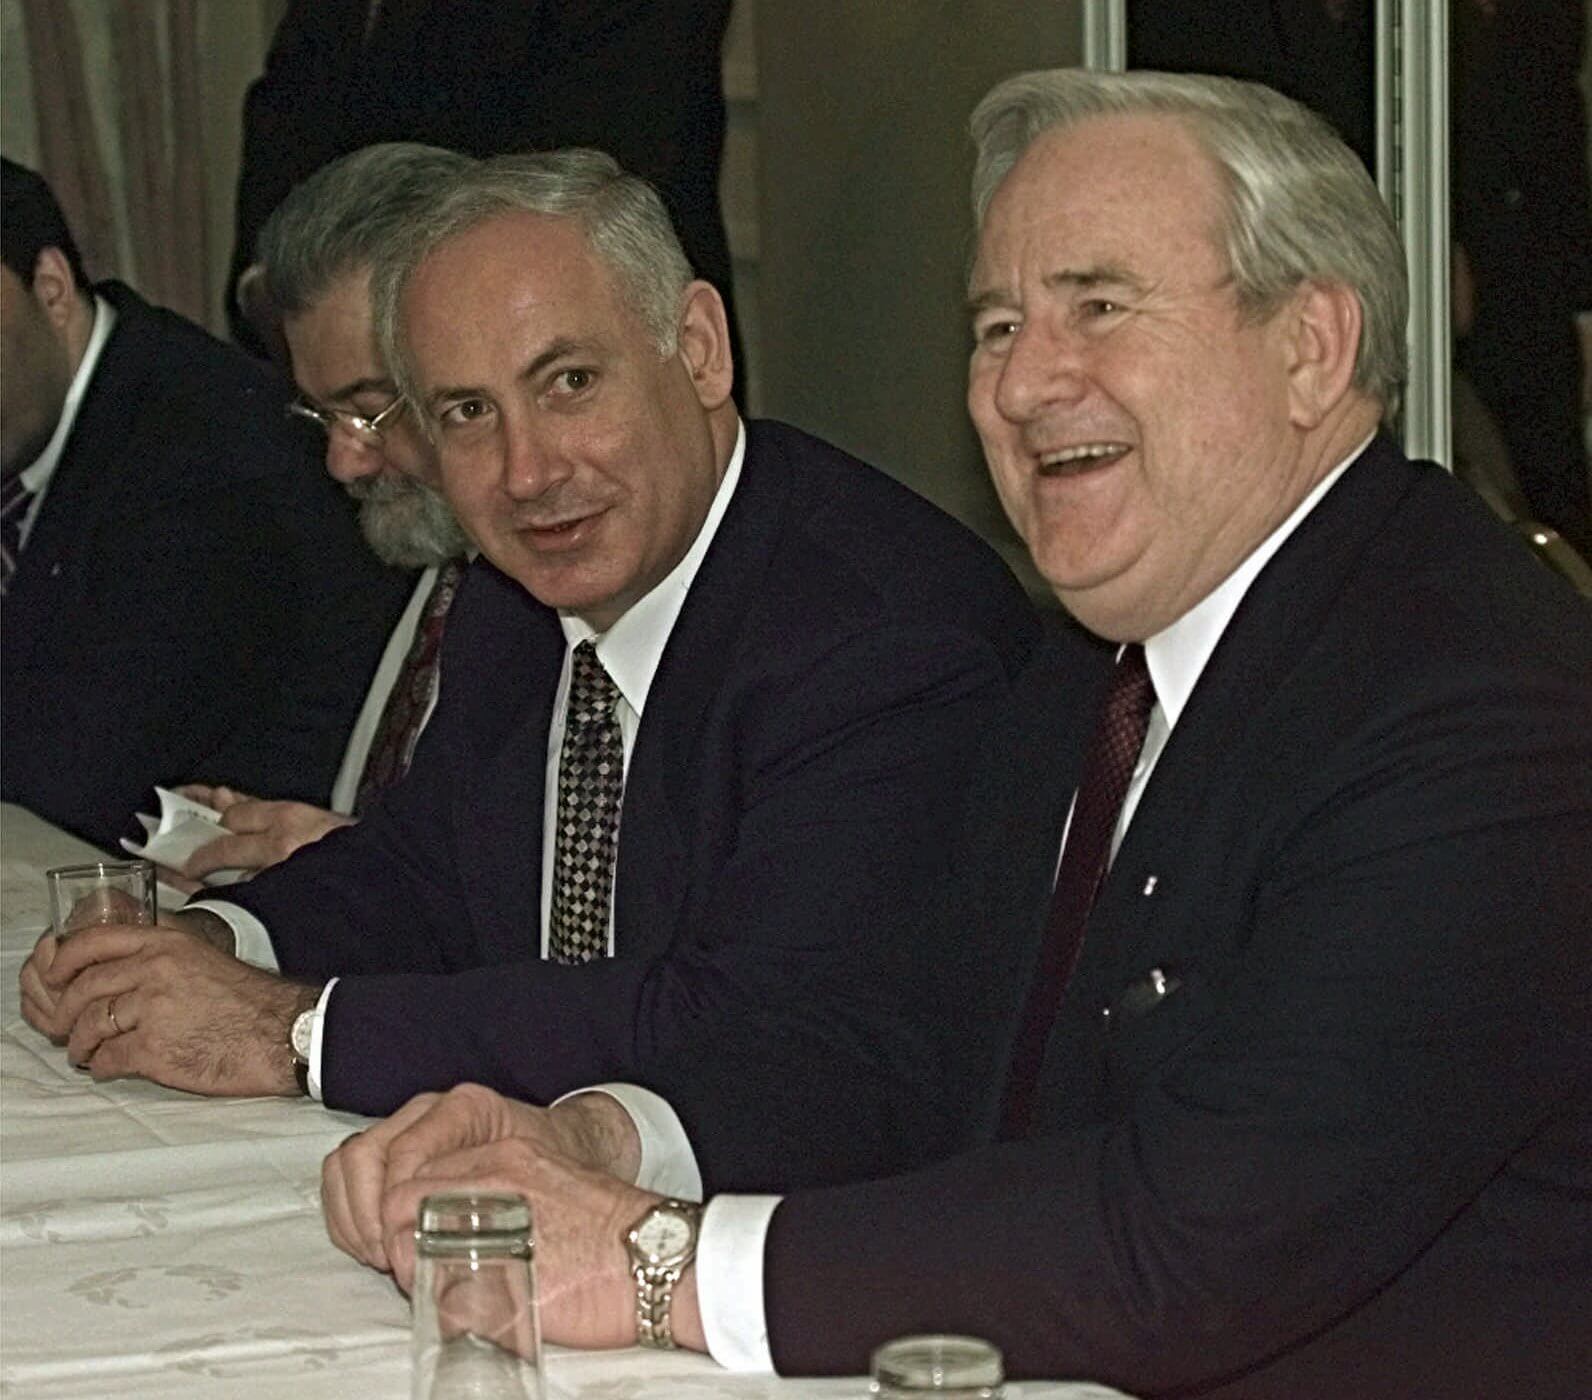 Netanyahu, left, meets Falwell at a hotel in Washington, Jan. 19, 1998. Greg Gibson | AP